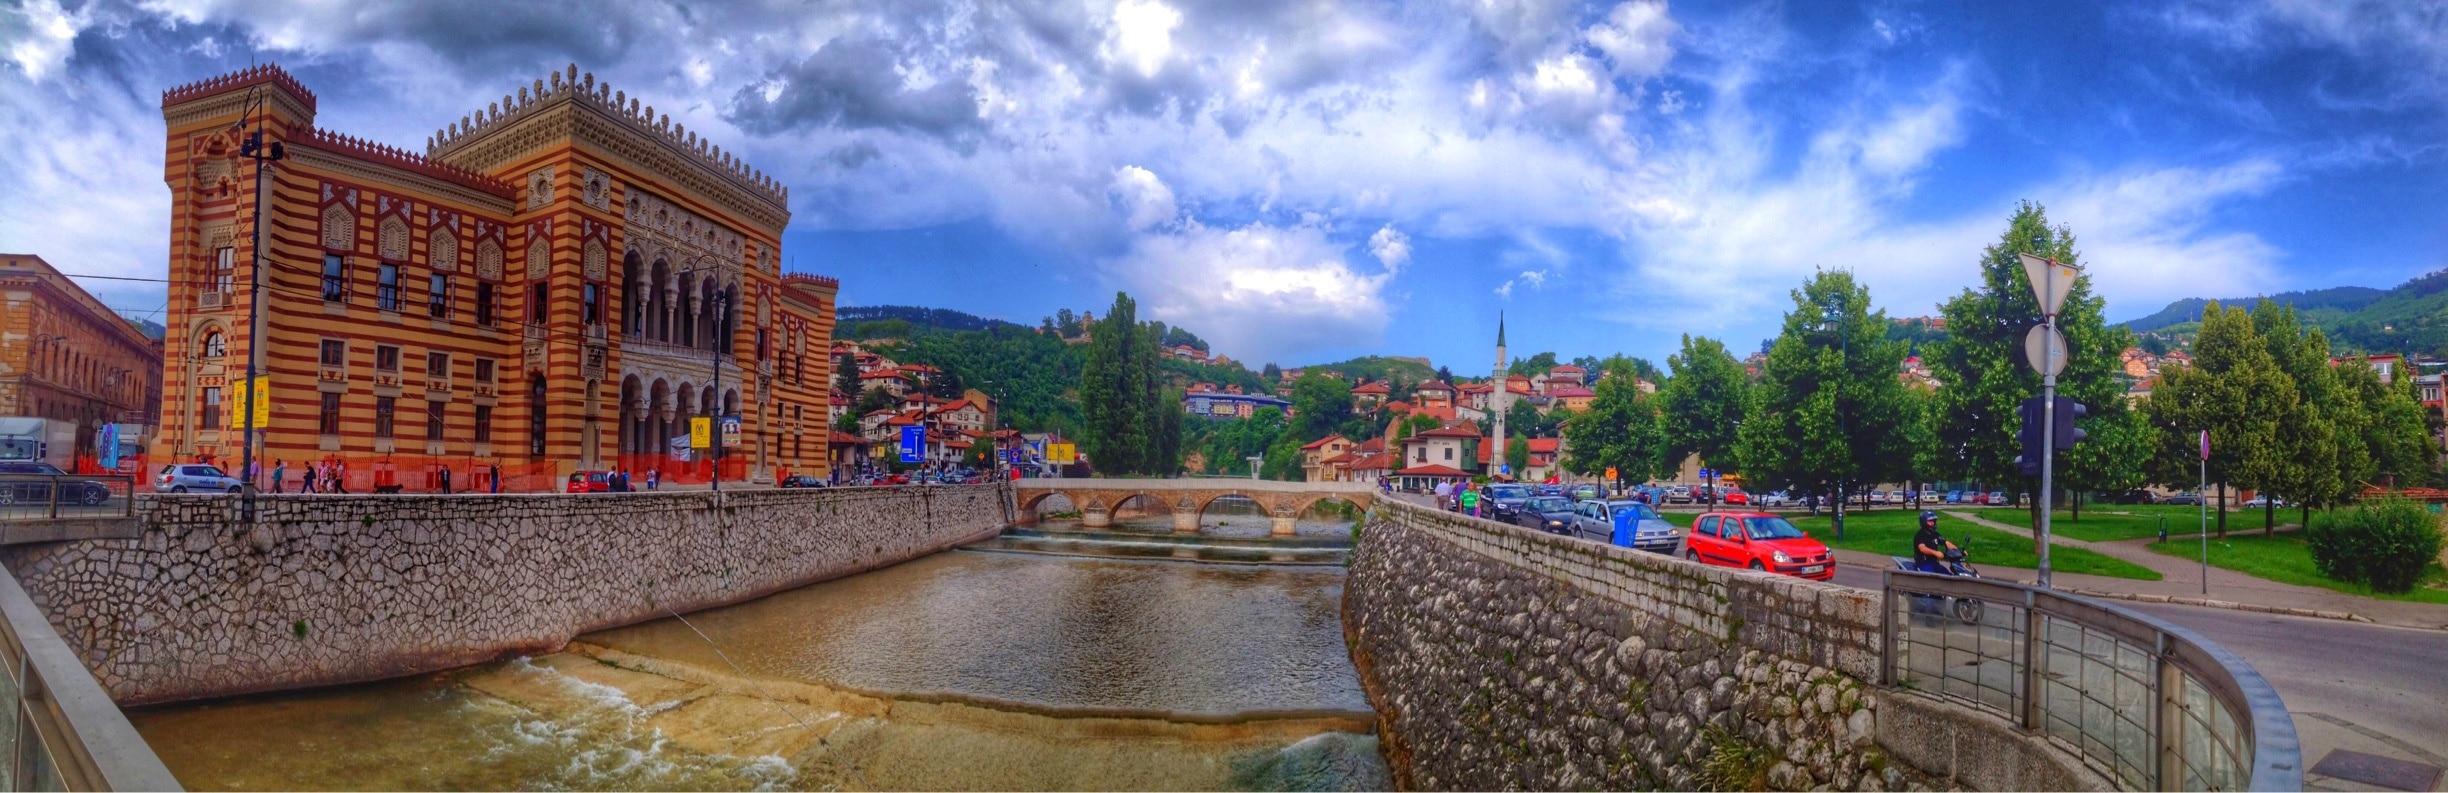 Sarajevo, Fédération de Bosnie-et-Herzégovine, Bosnie-Herzégovine